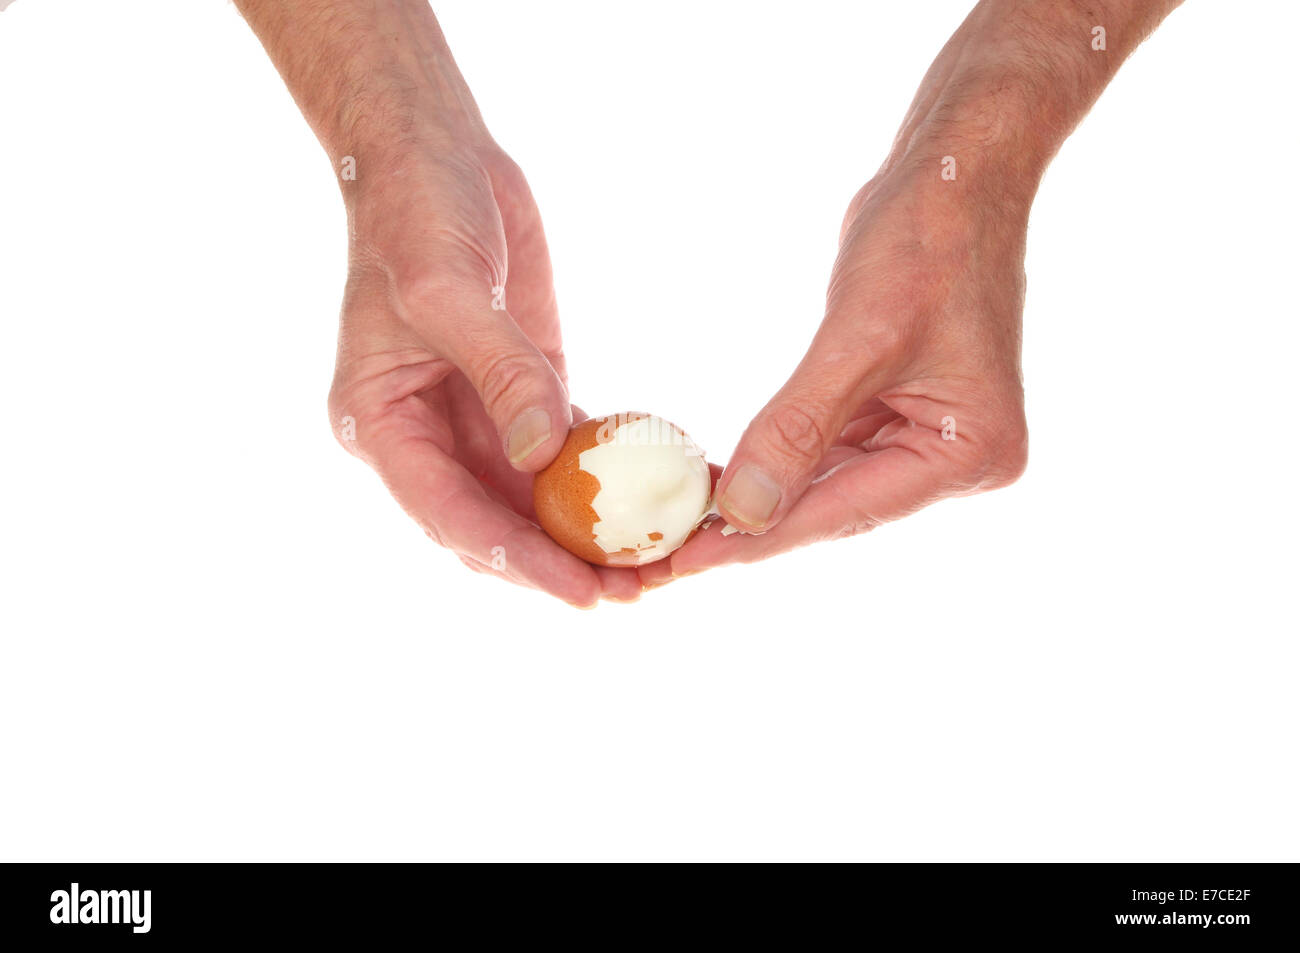 Pair of hands peeling a hardboiled egg isolated against white Stock Photo